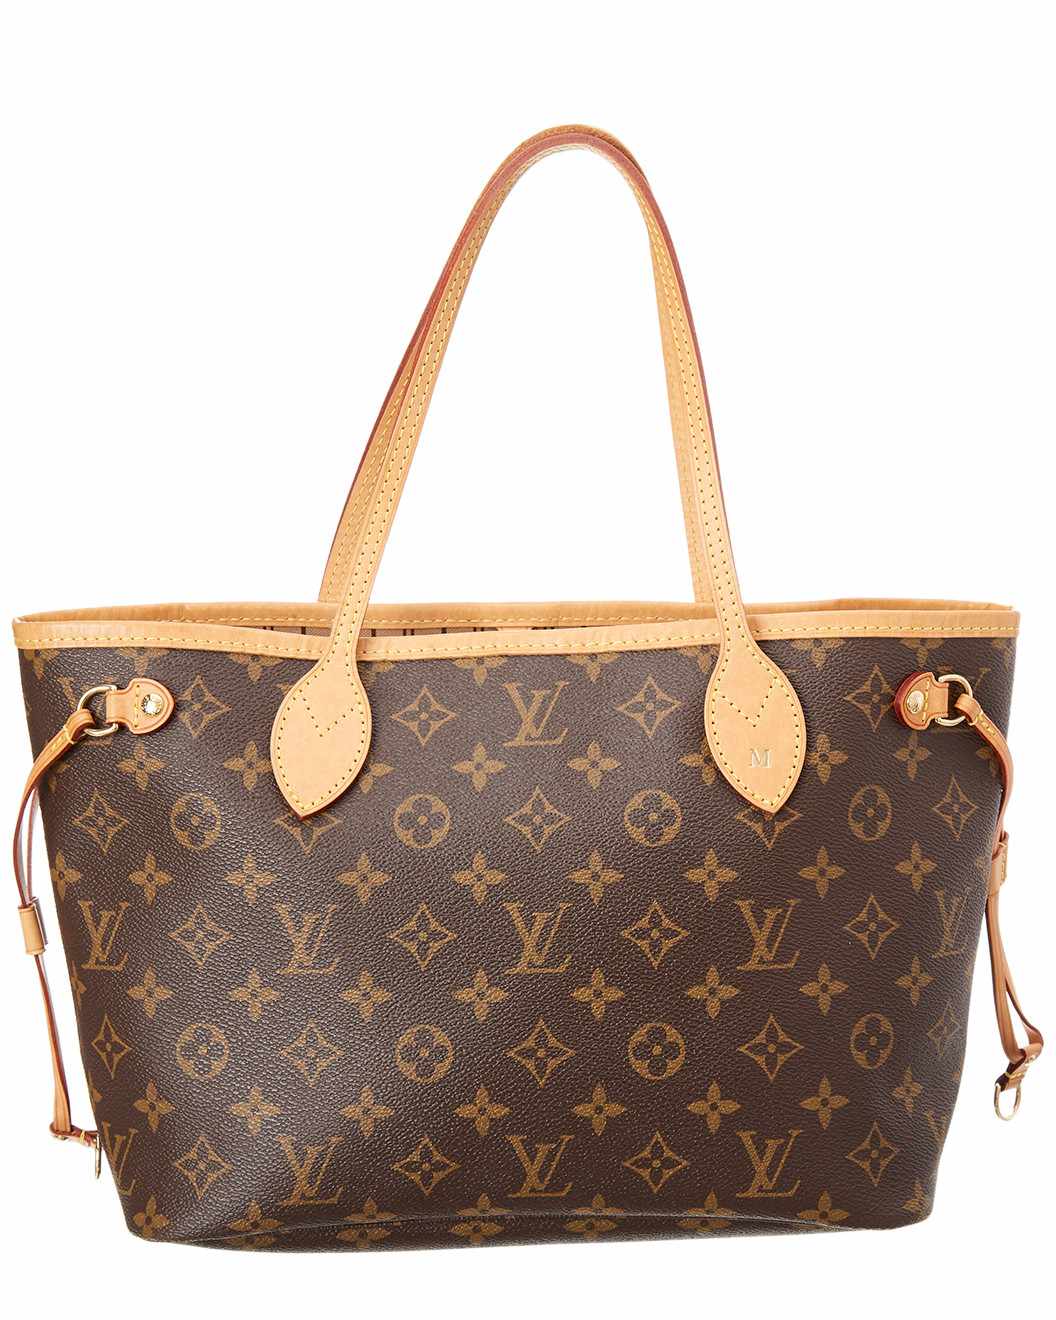 This Louis Vuitton Handbag Sale Might Break the Internet | InStyle